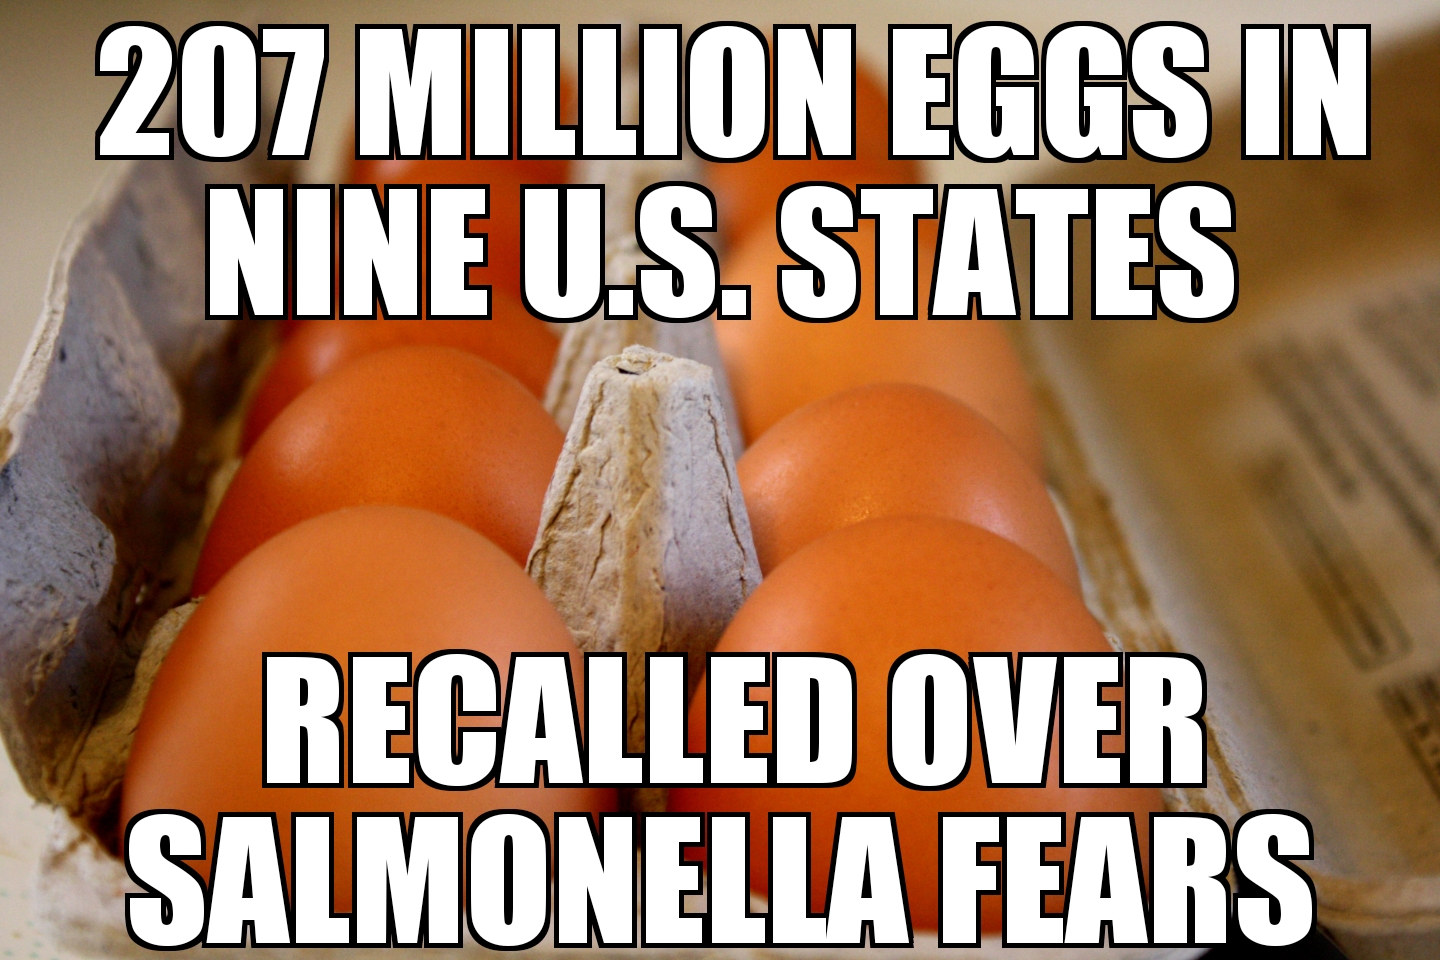 207 million eggs recalled over salmonella